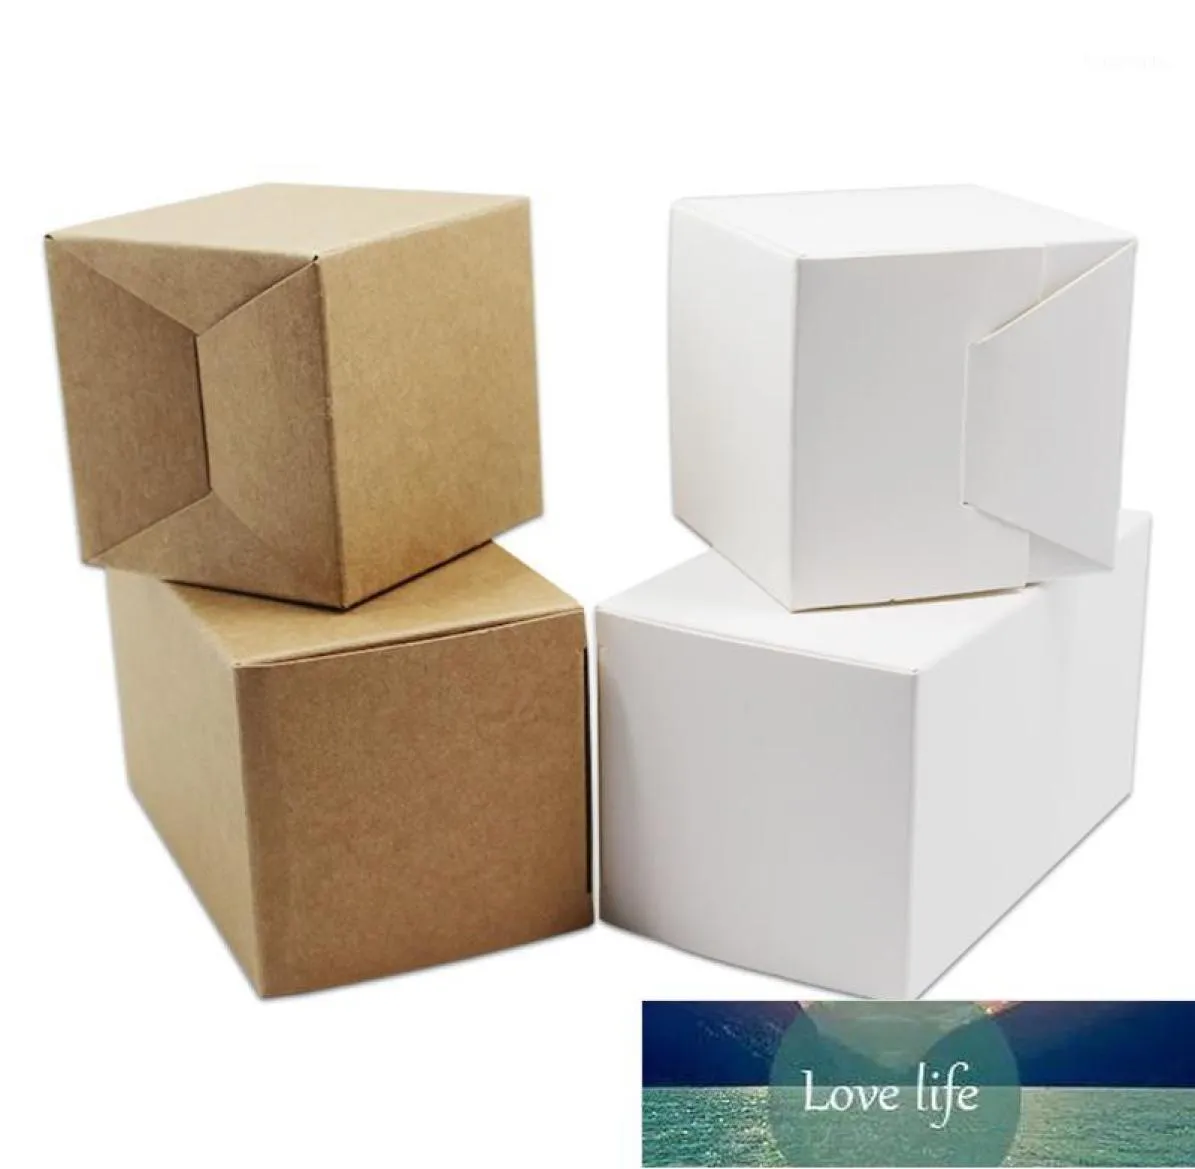 50pcs 5x5x5cm quadrata Kraft carta regalo bianca scatola per cartone piccolo cartone cartone cartone cartone caramella imballaggi imballaggi scatole per feste wedding15701684